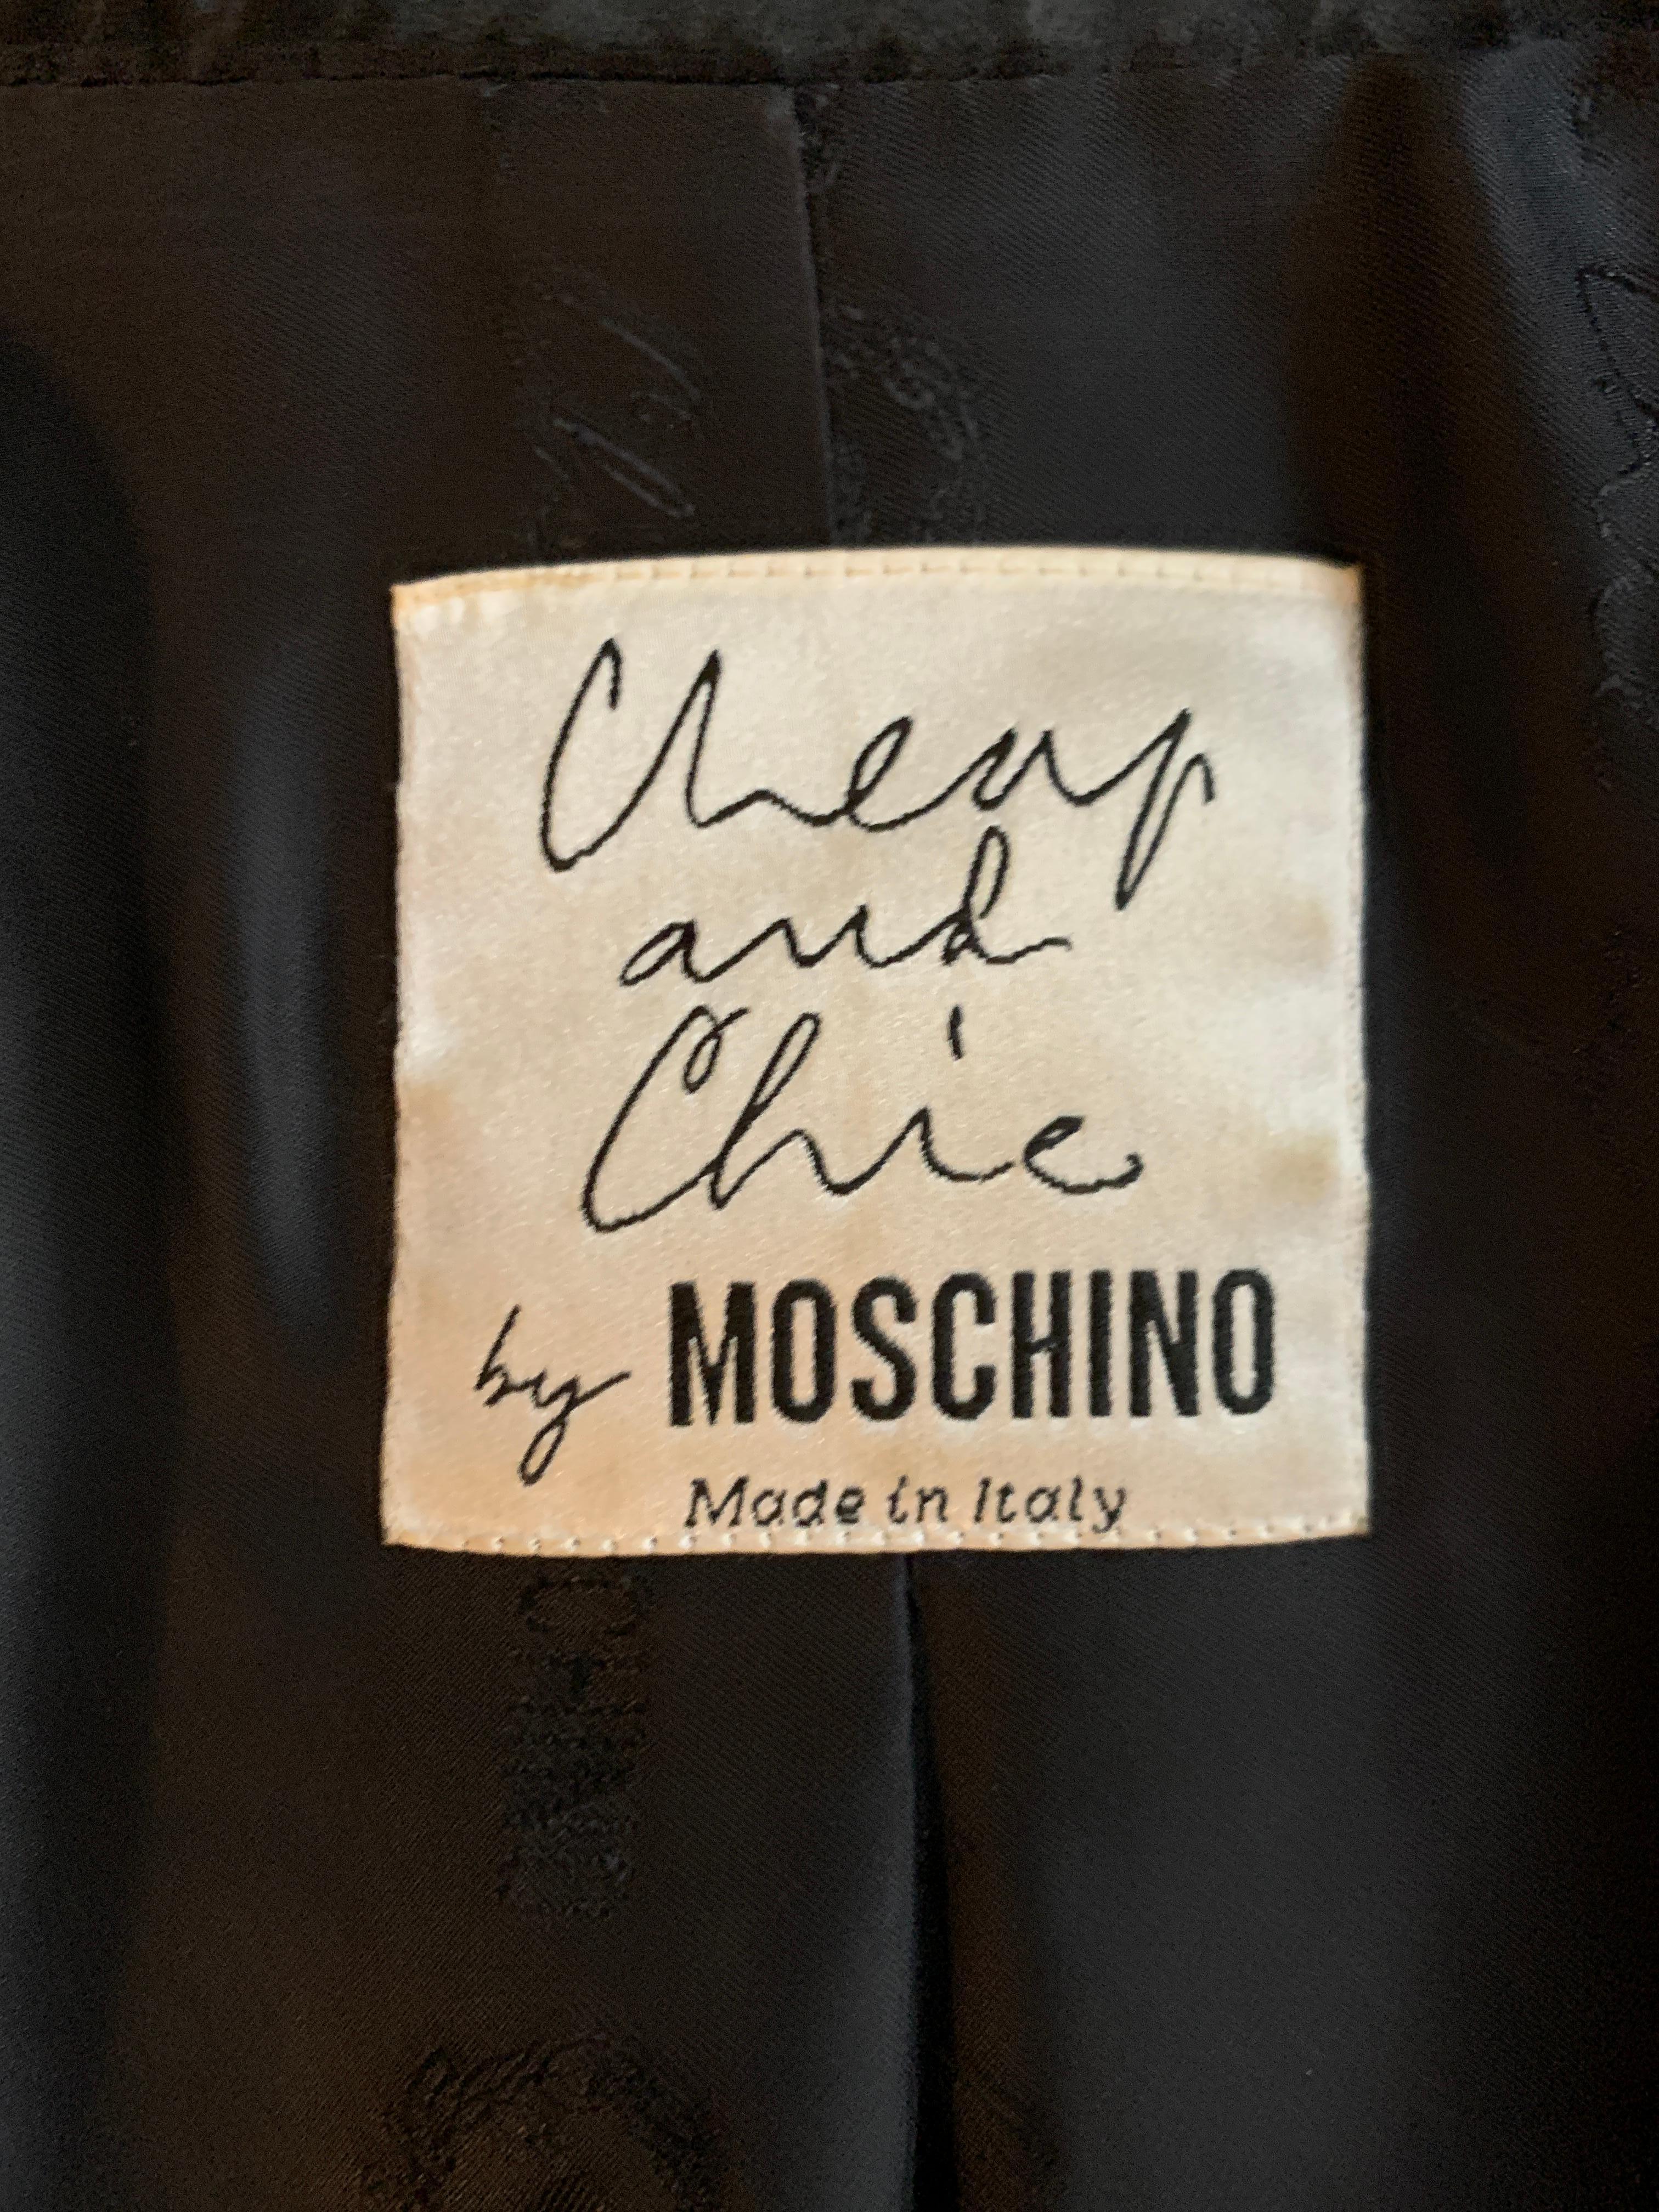 Moschino Cheap & Chic Vintage 90s Faucet Embellished Black Tuxedo Jacket Blazer 2